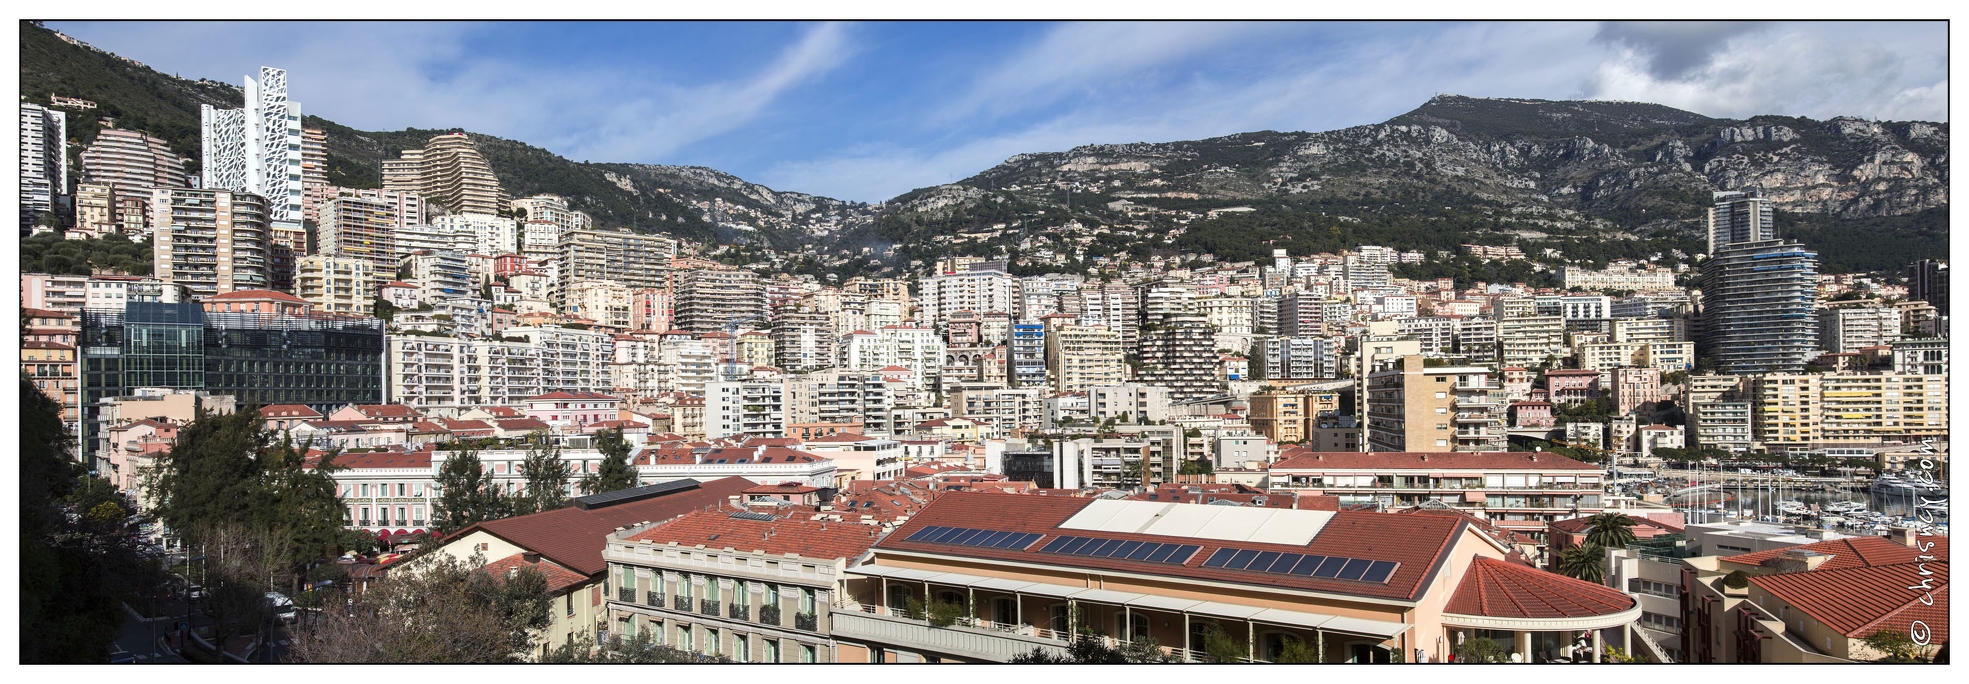 20140228-06_7795-Monaco__pano.jpg